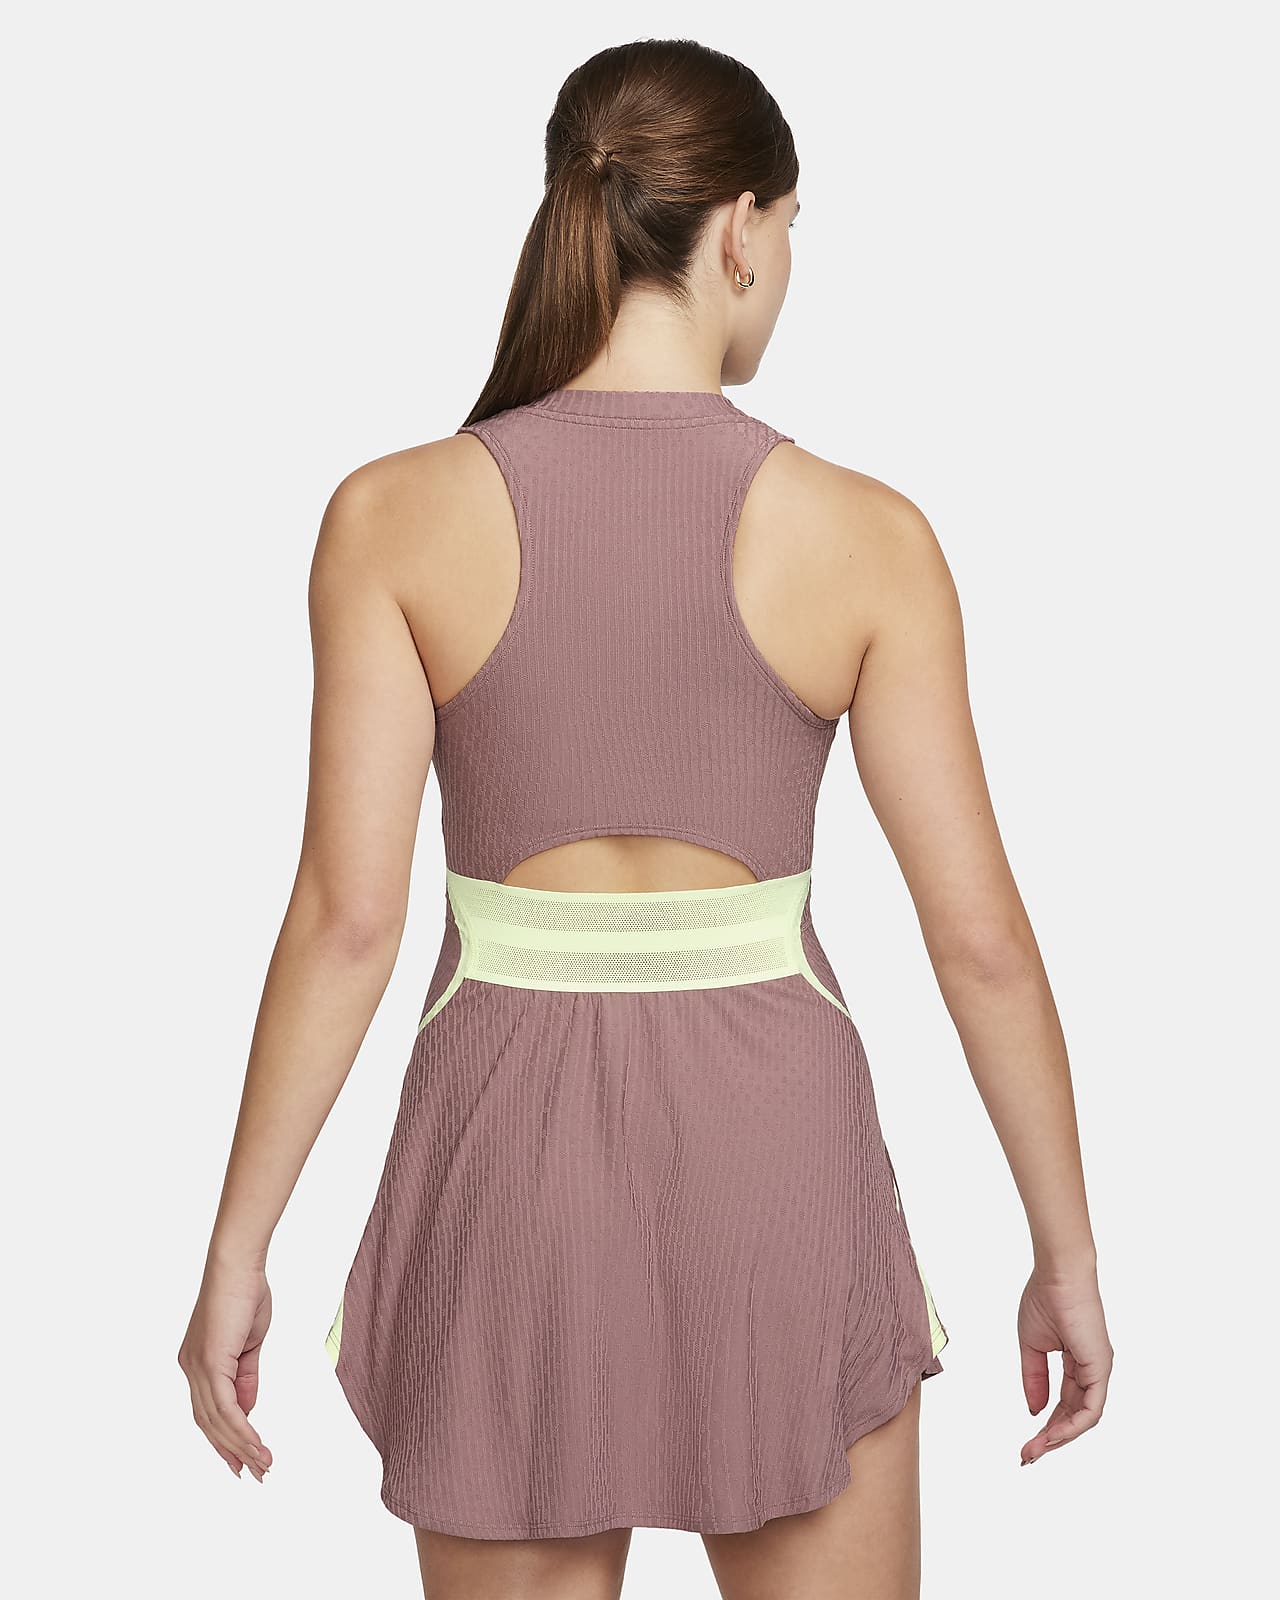 NikeCourt Slam Women's Dri-FIT Tennis Dress.